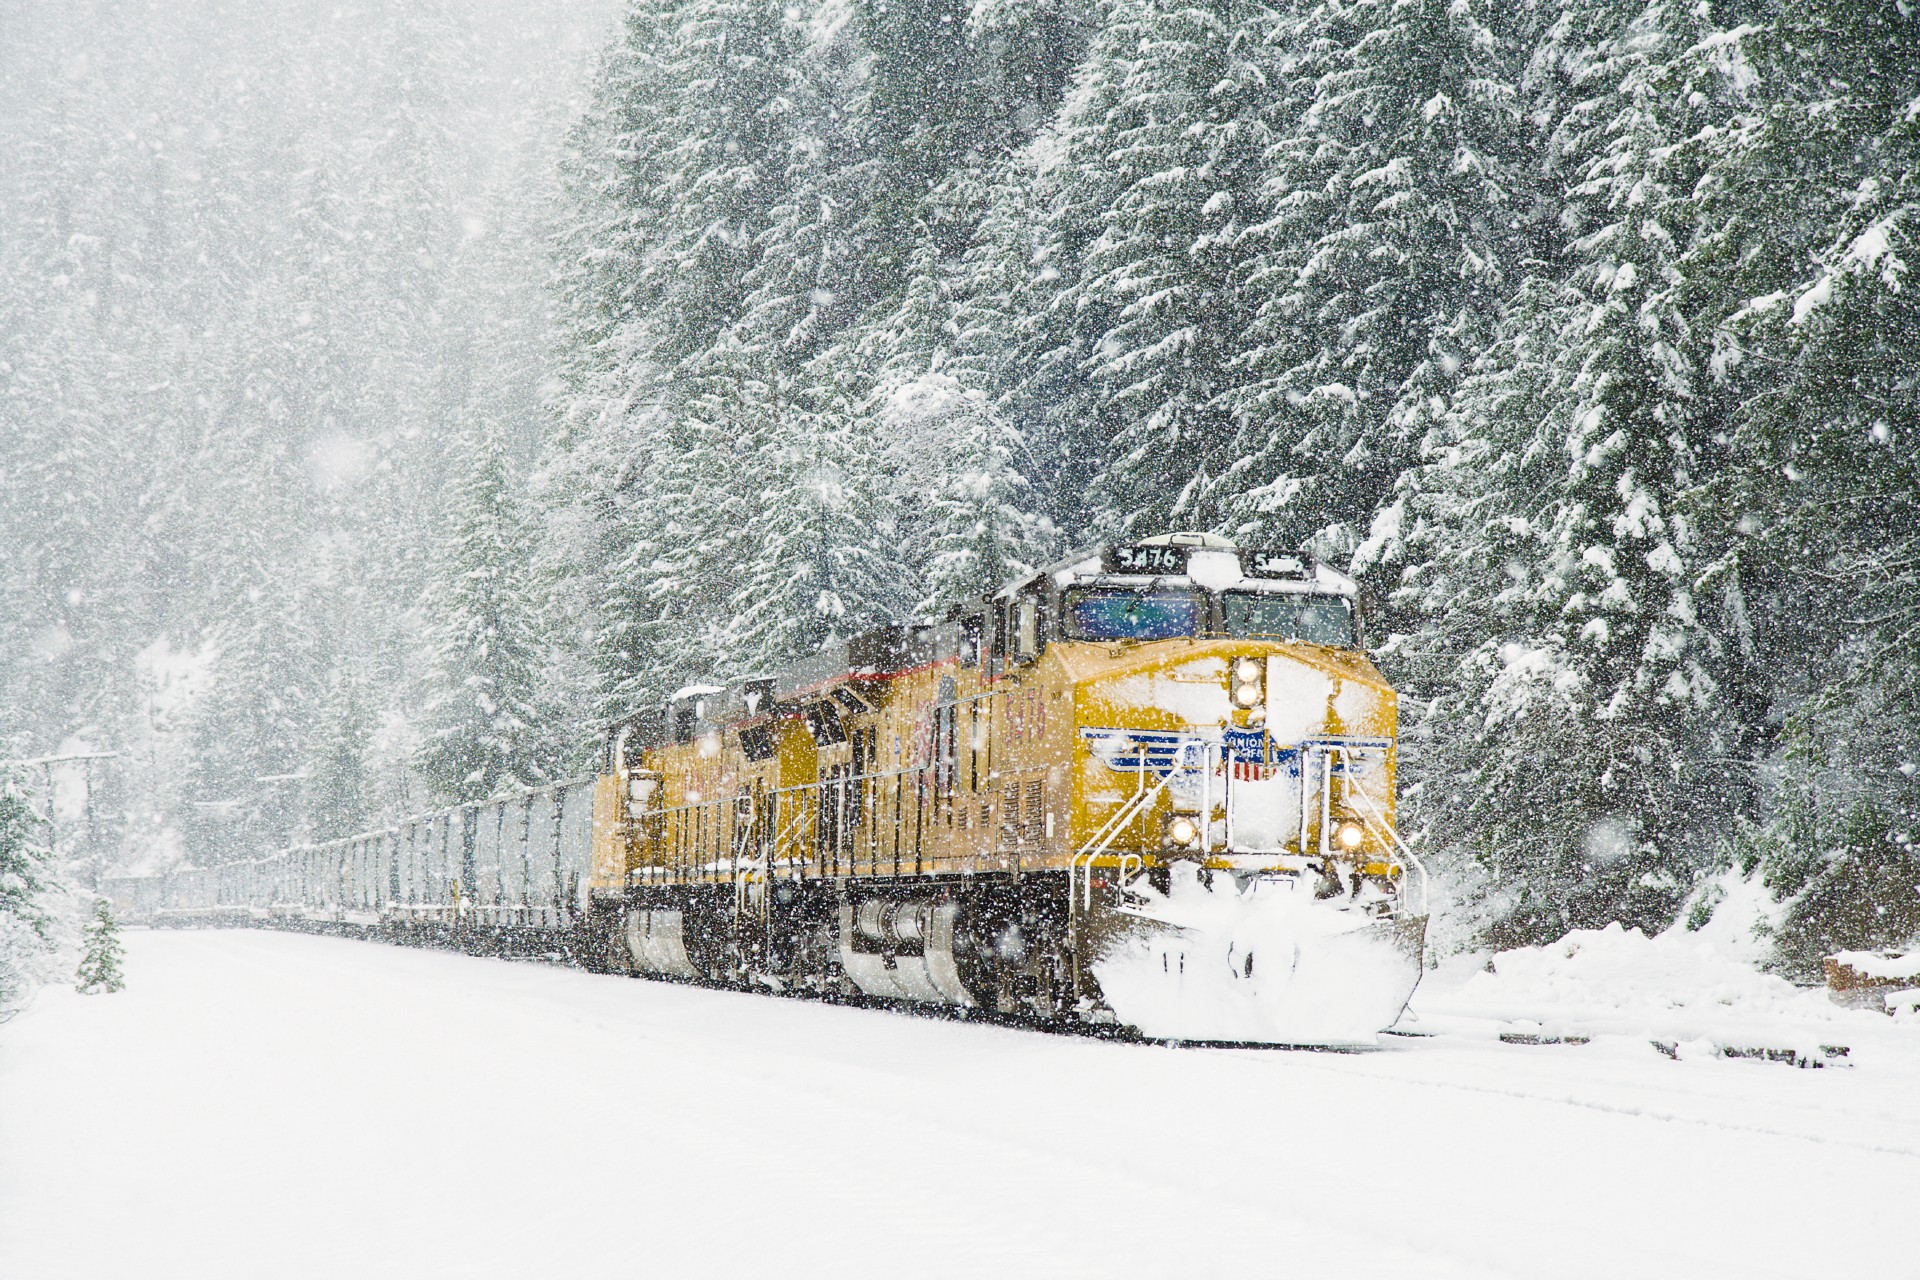 Locomotive Railroads and Winter Weather